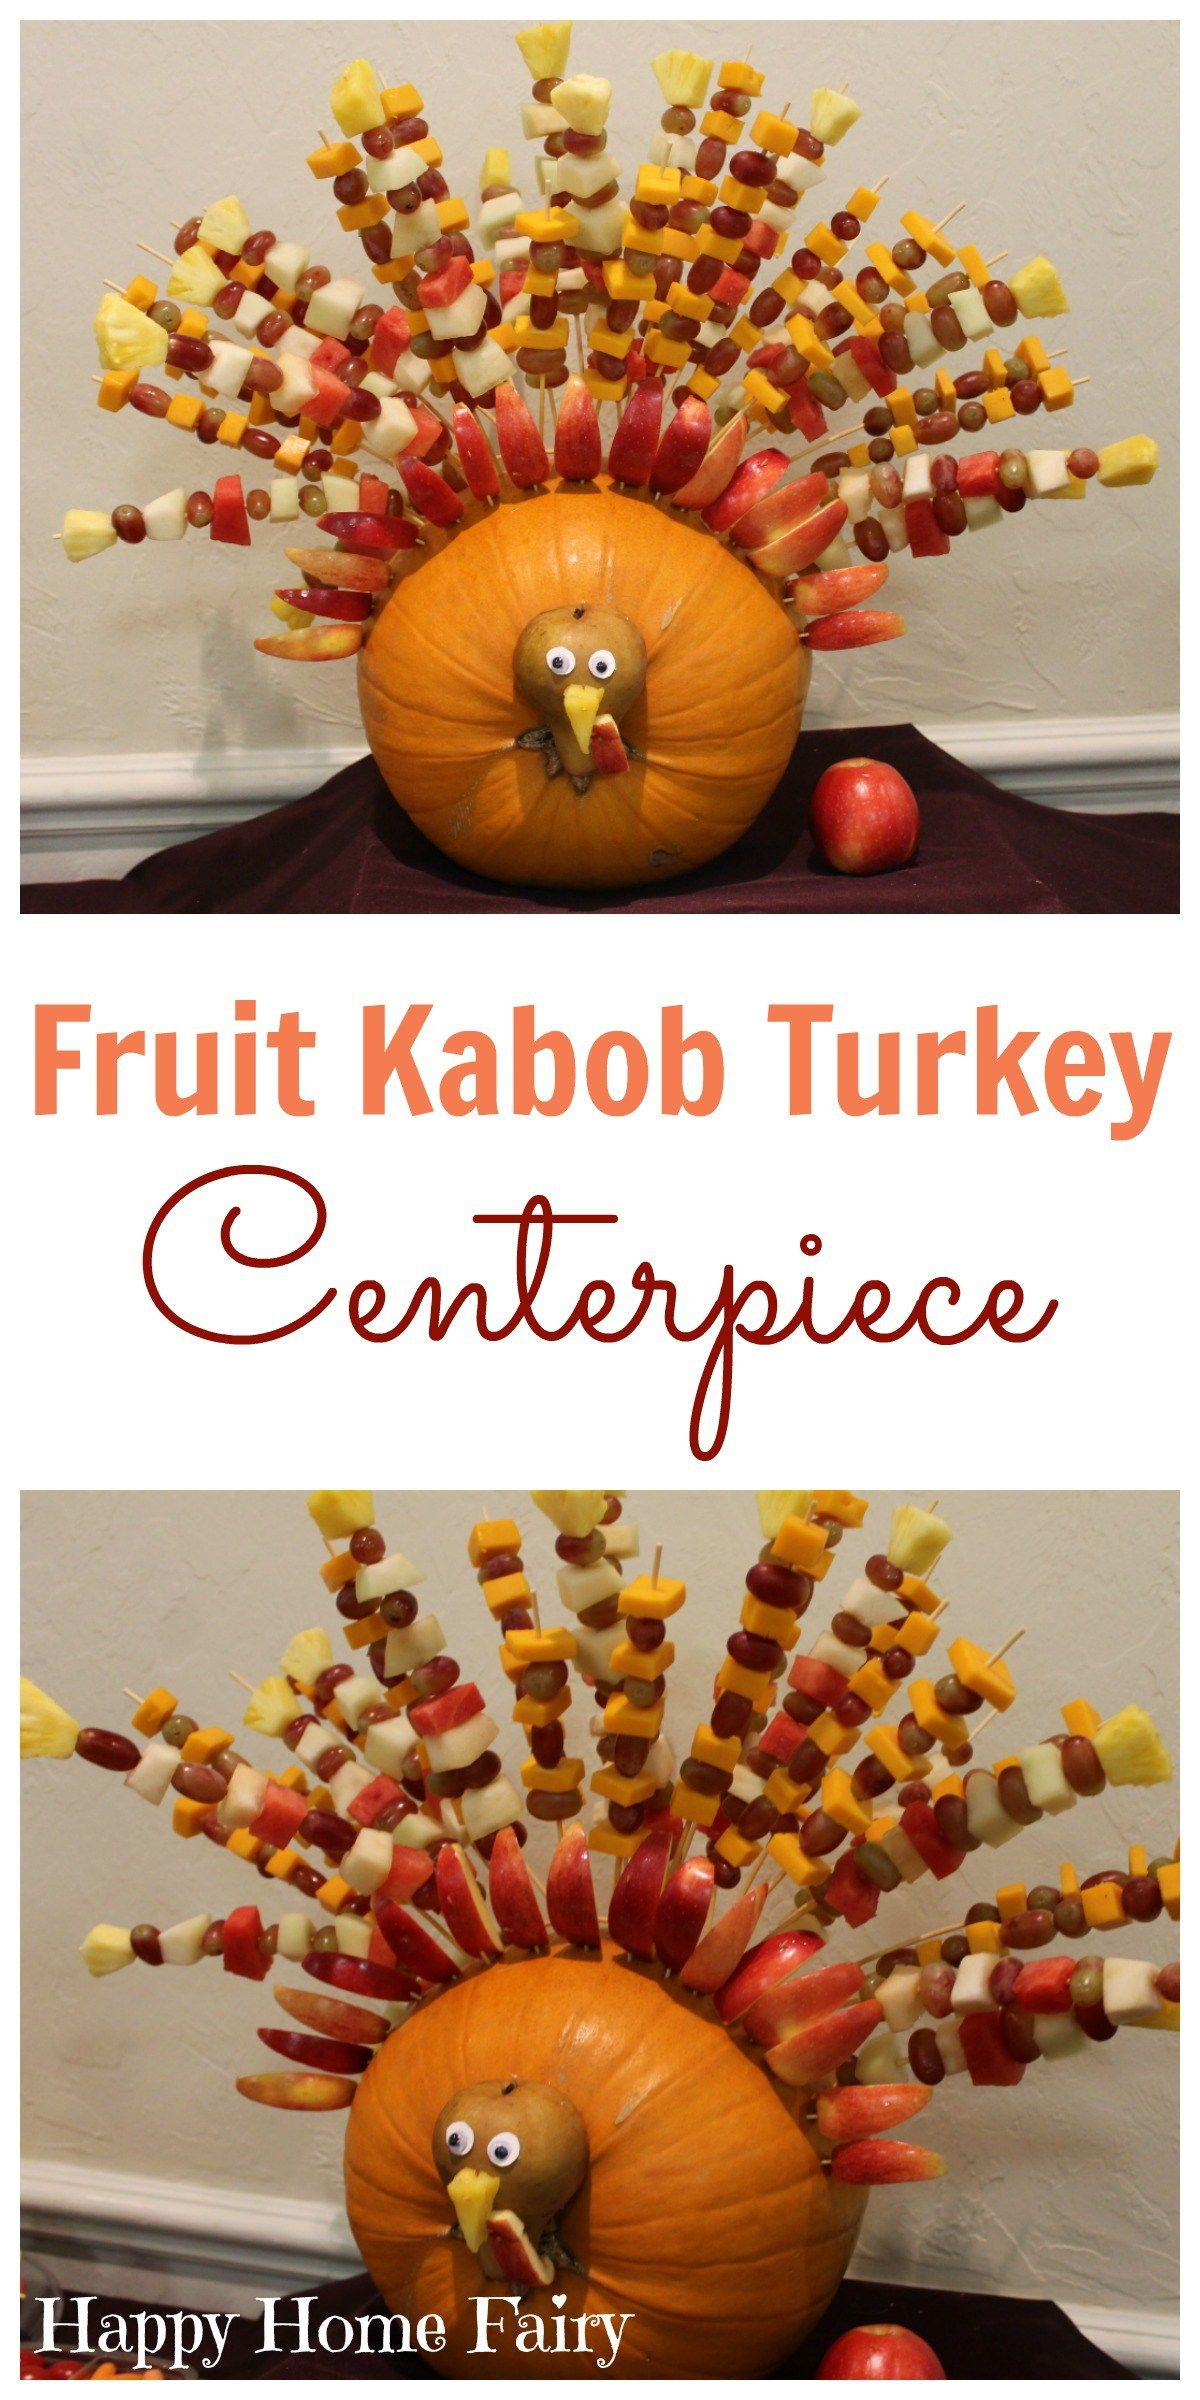 Turkey Centerpieces Thanksgiving
 The Greatest Thanksgiving Centerpiece